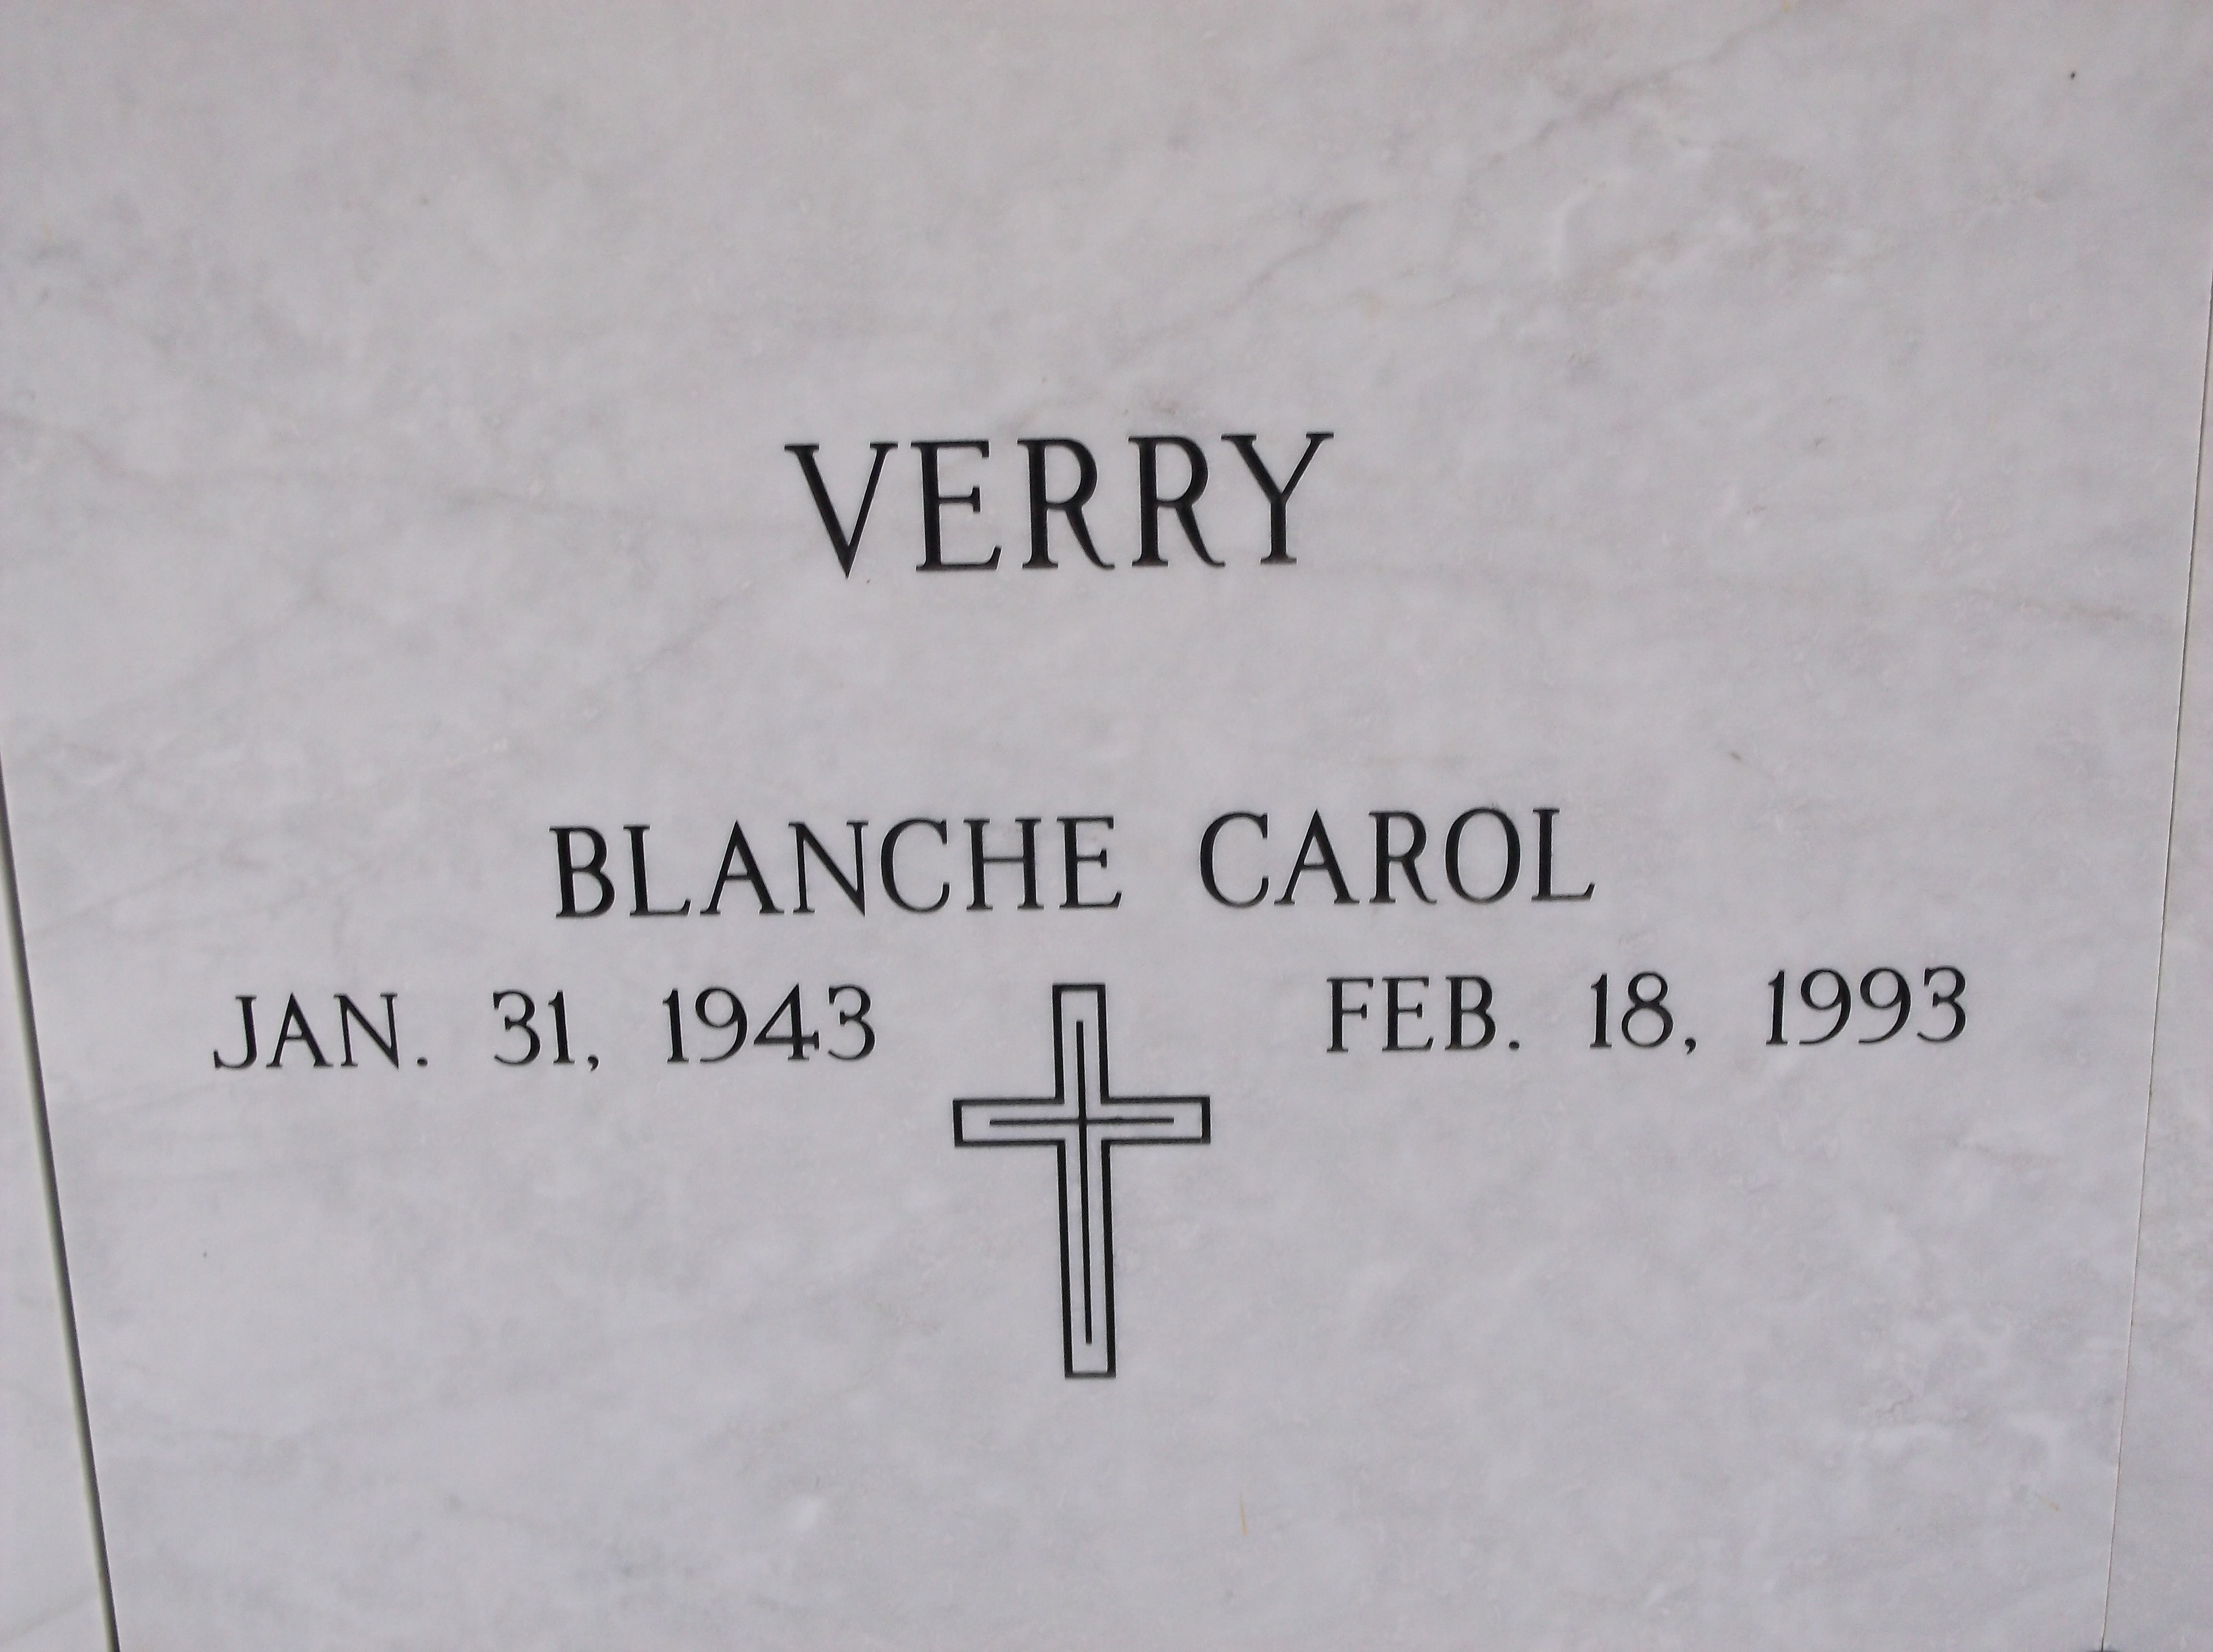 Blanche Carol Verry